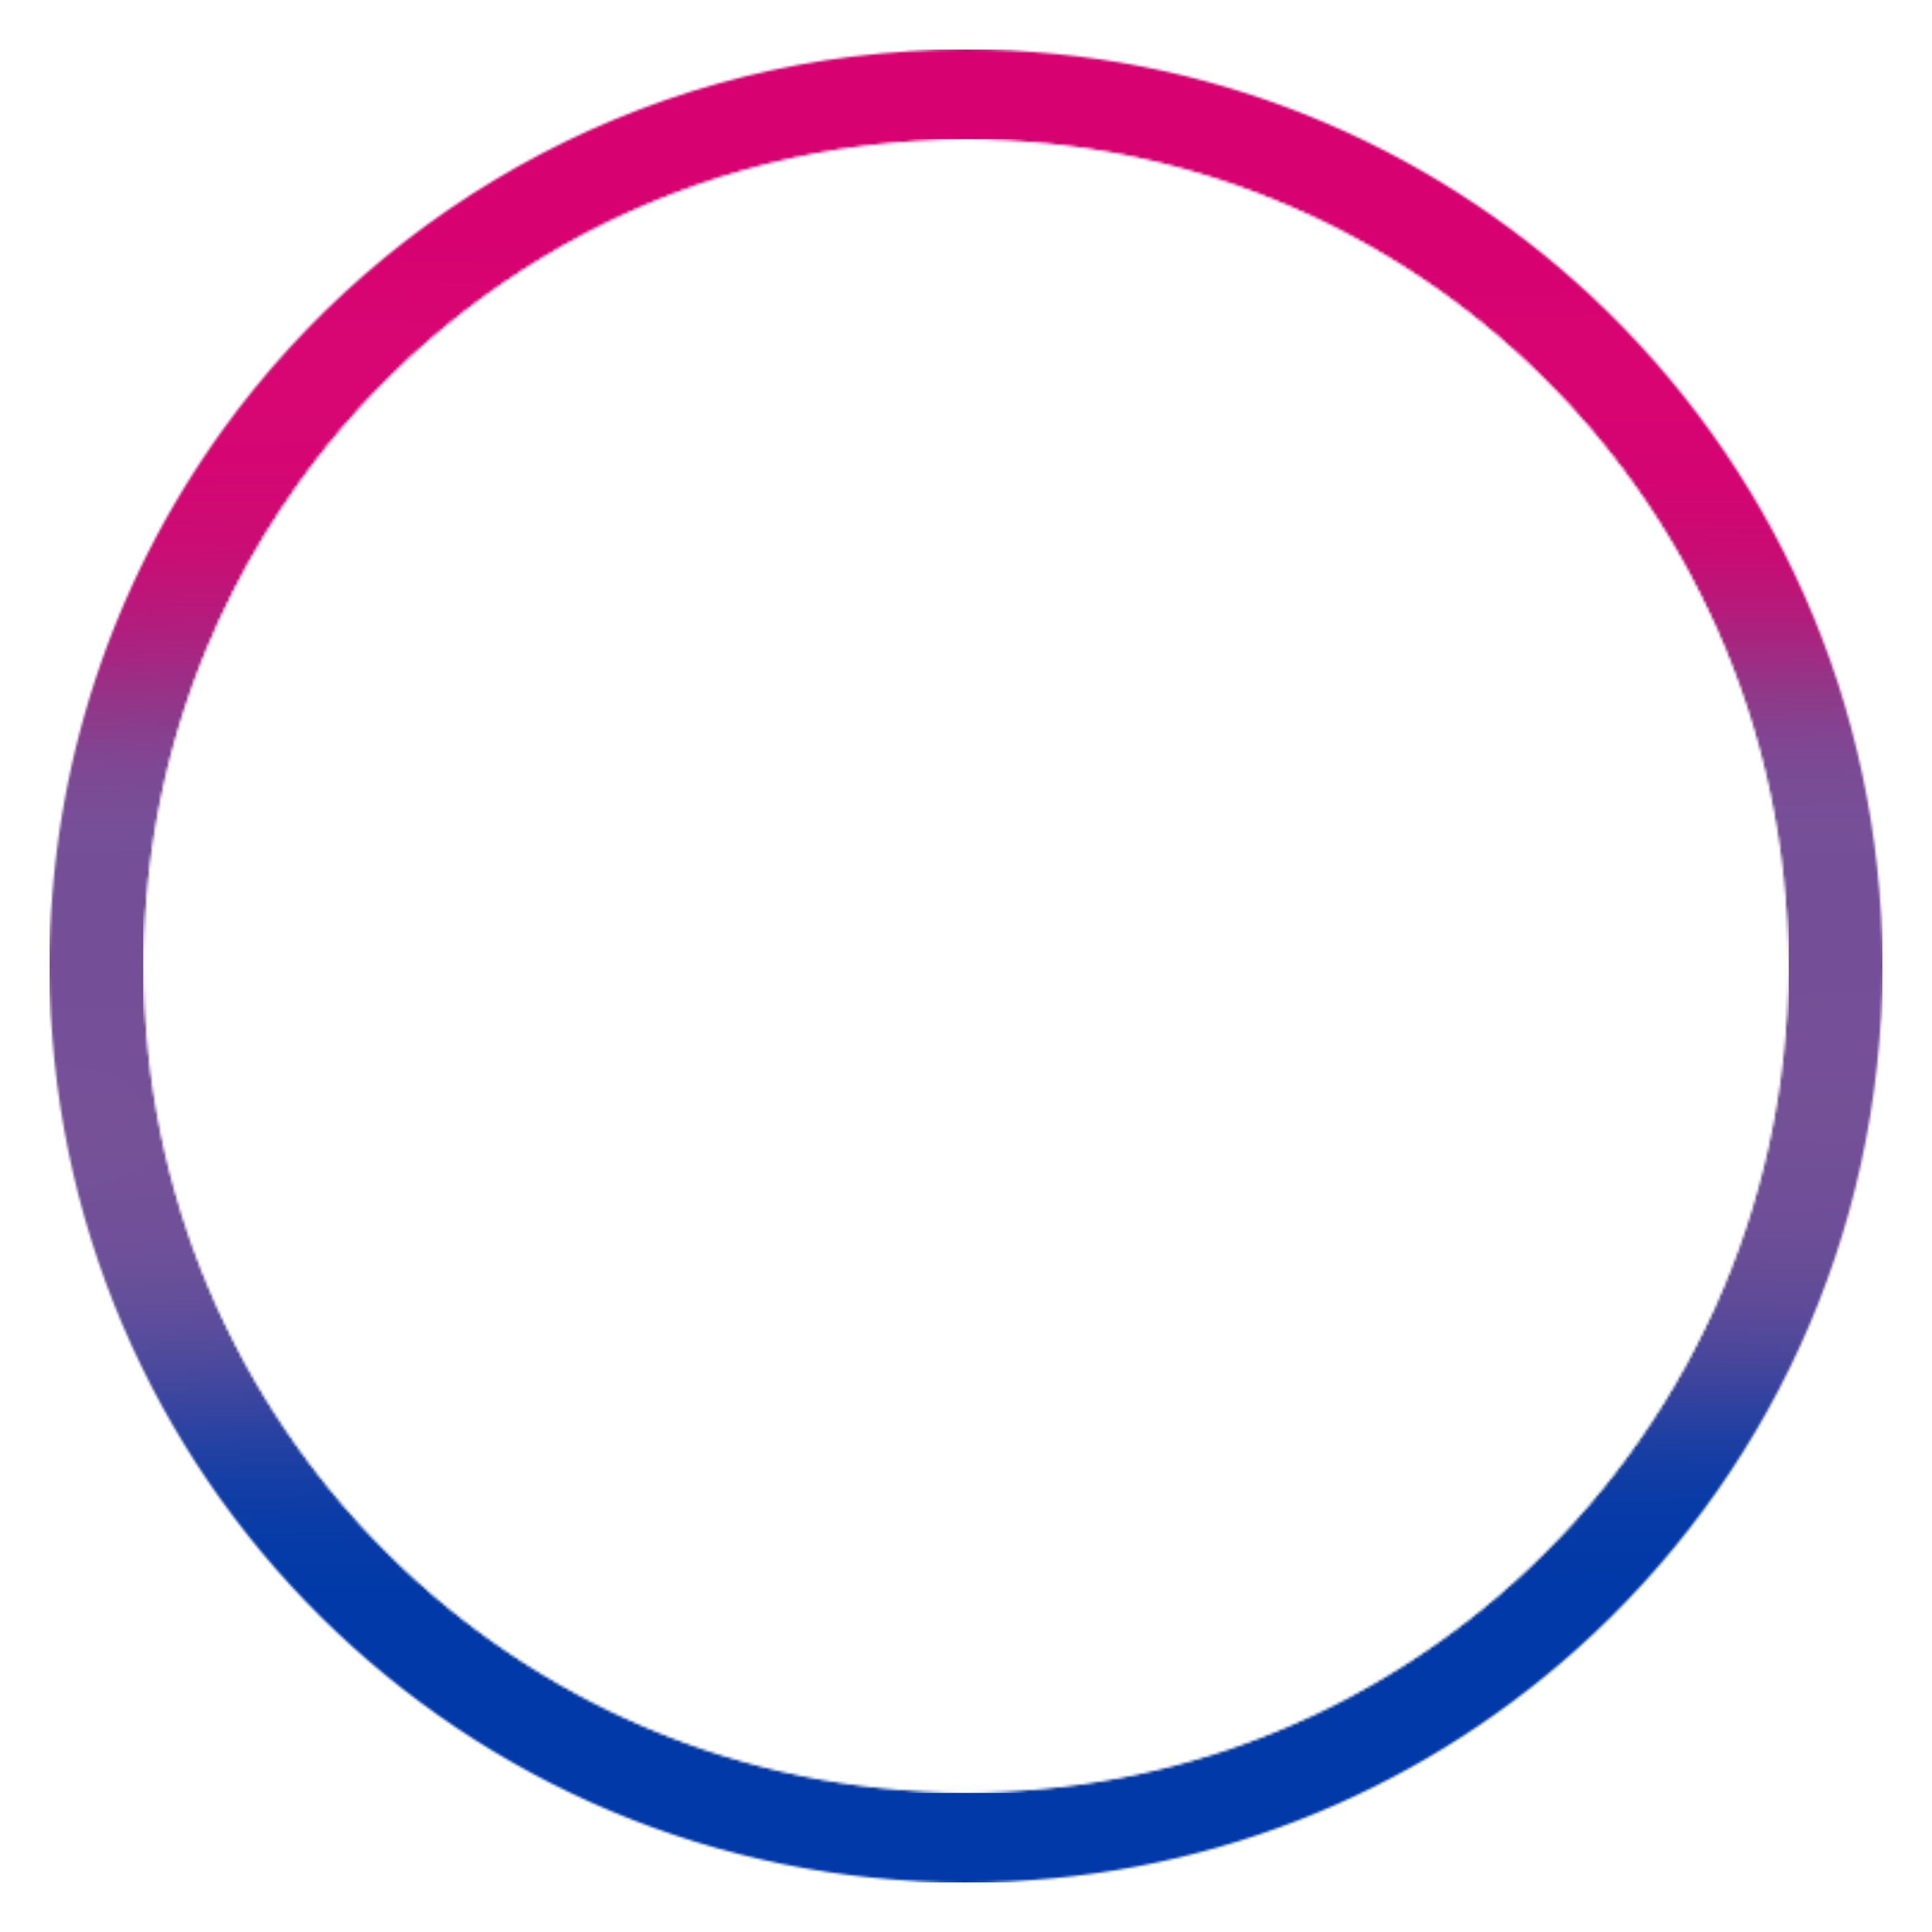 Here 00. Красивый круг. Круг для логотипа. Круг на прозрачном фоне. Окружность на белом фоне.